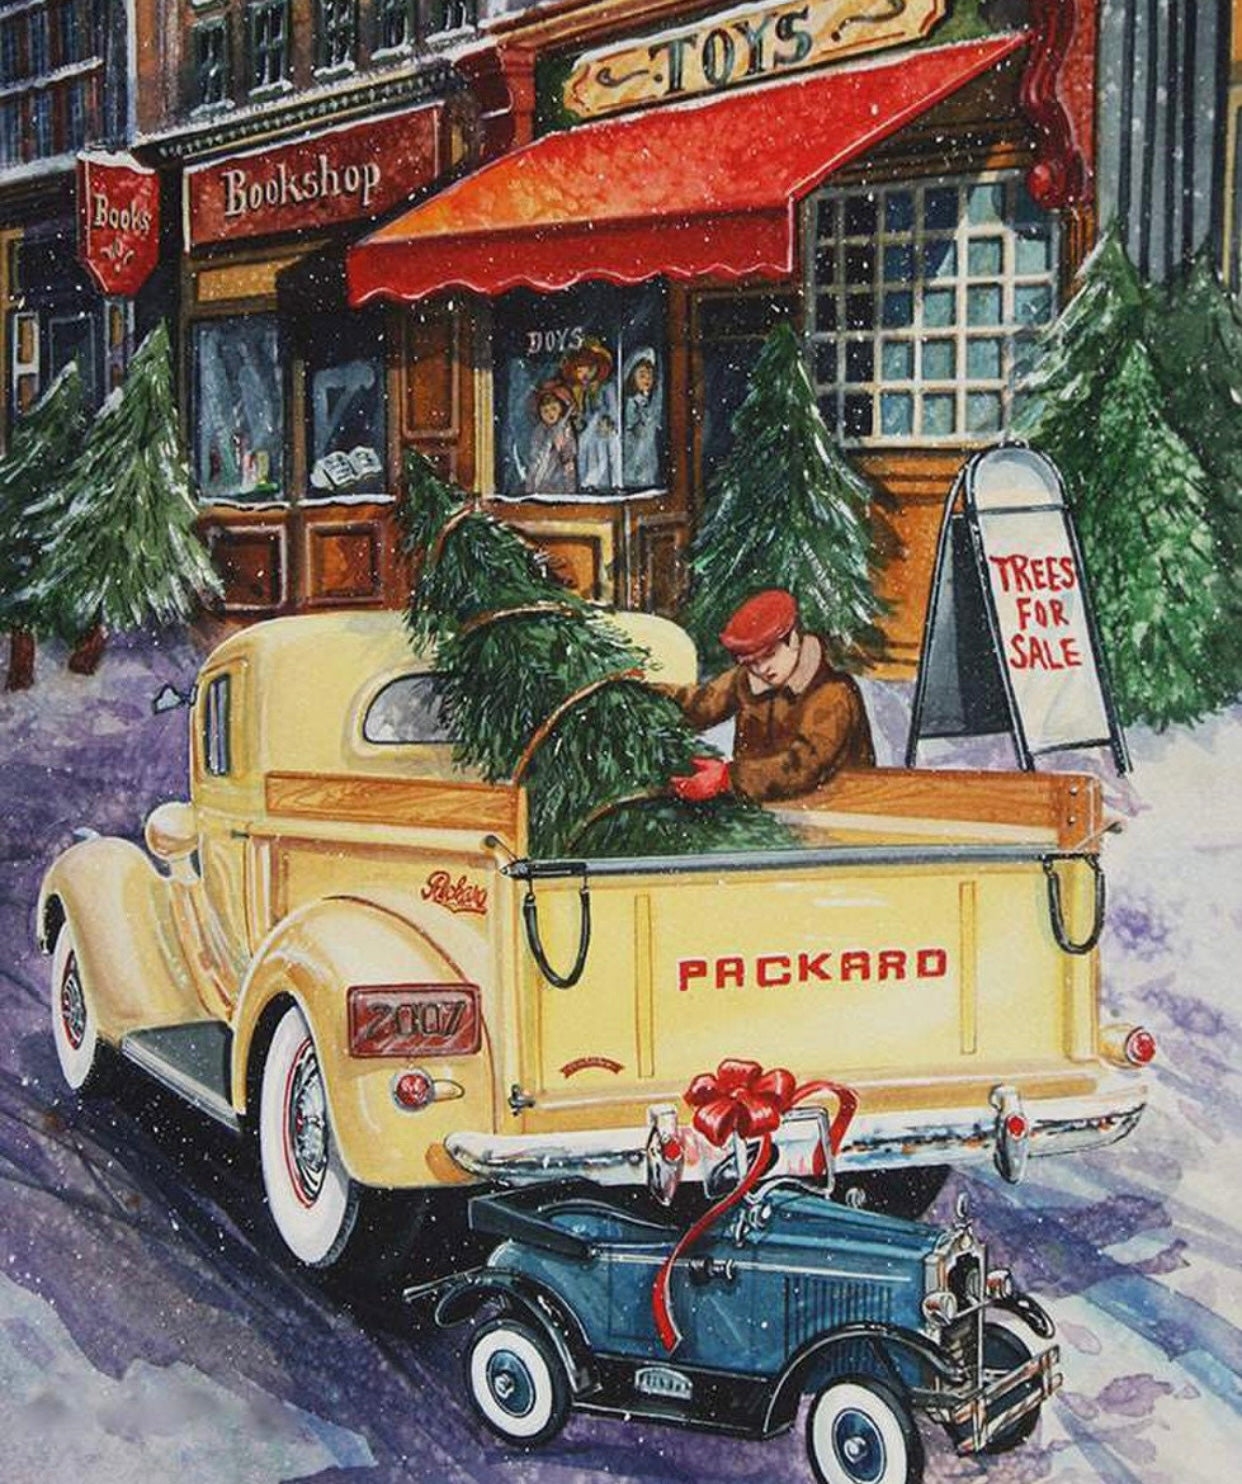 A Nostalgic Christmas Loading the Truck Panel